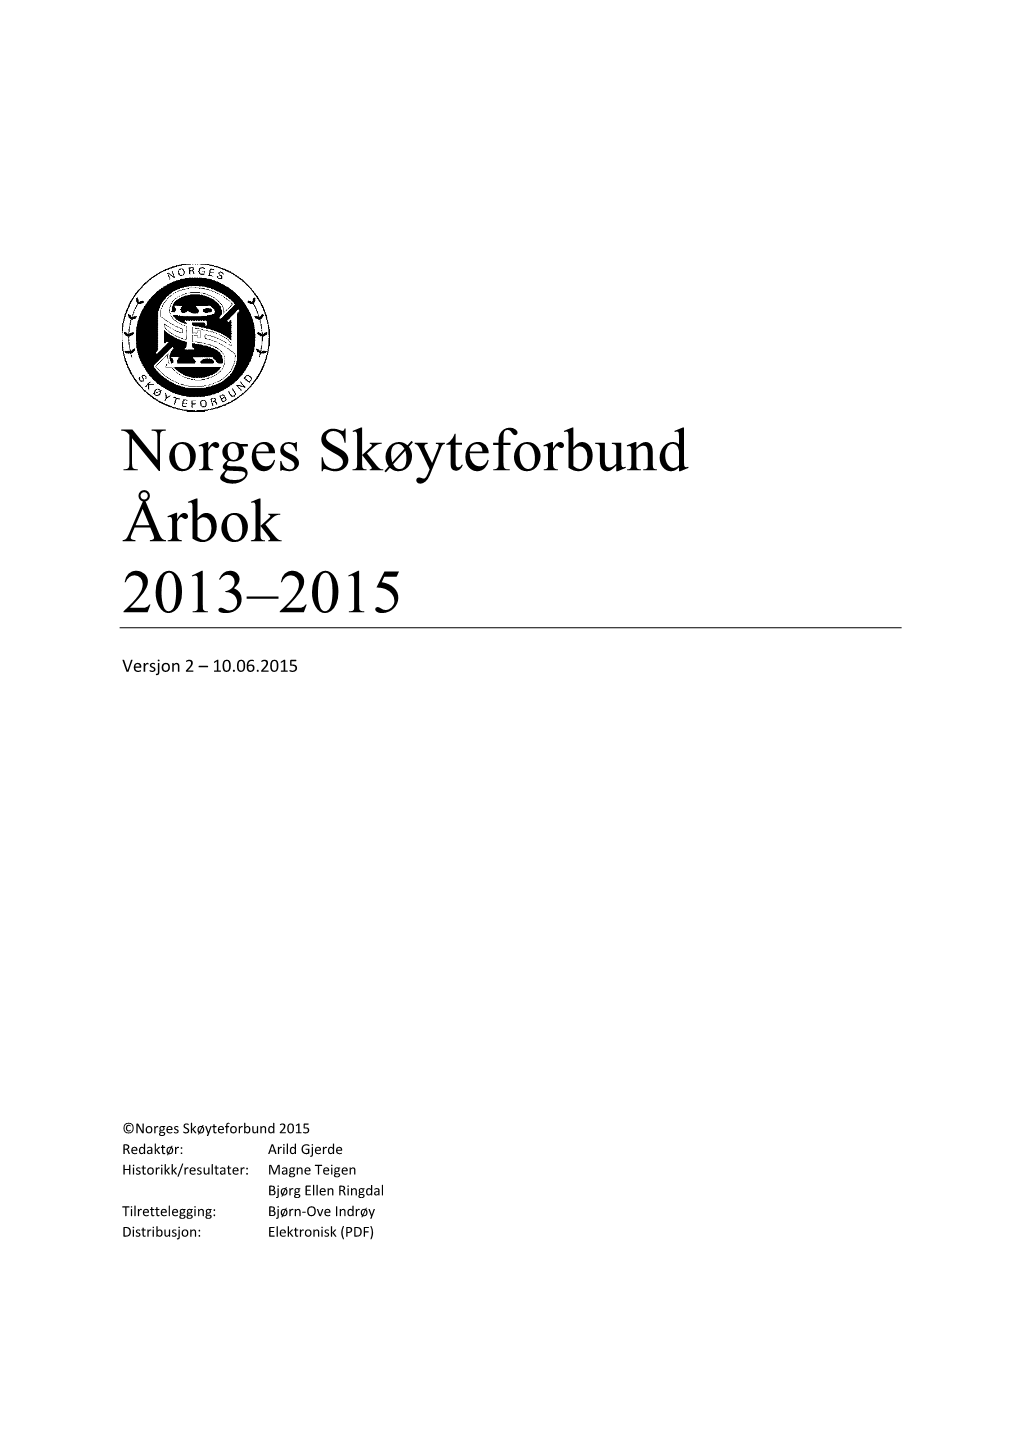 Norges Skøyteforbund Årbok 2013–2015